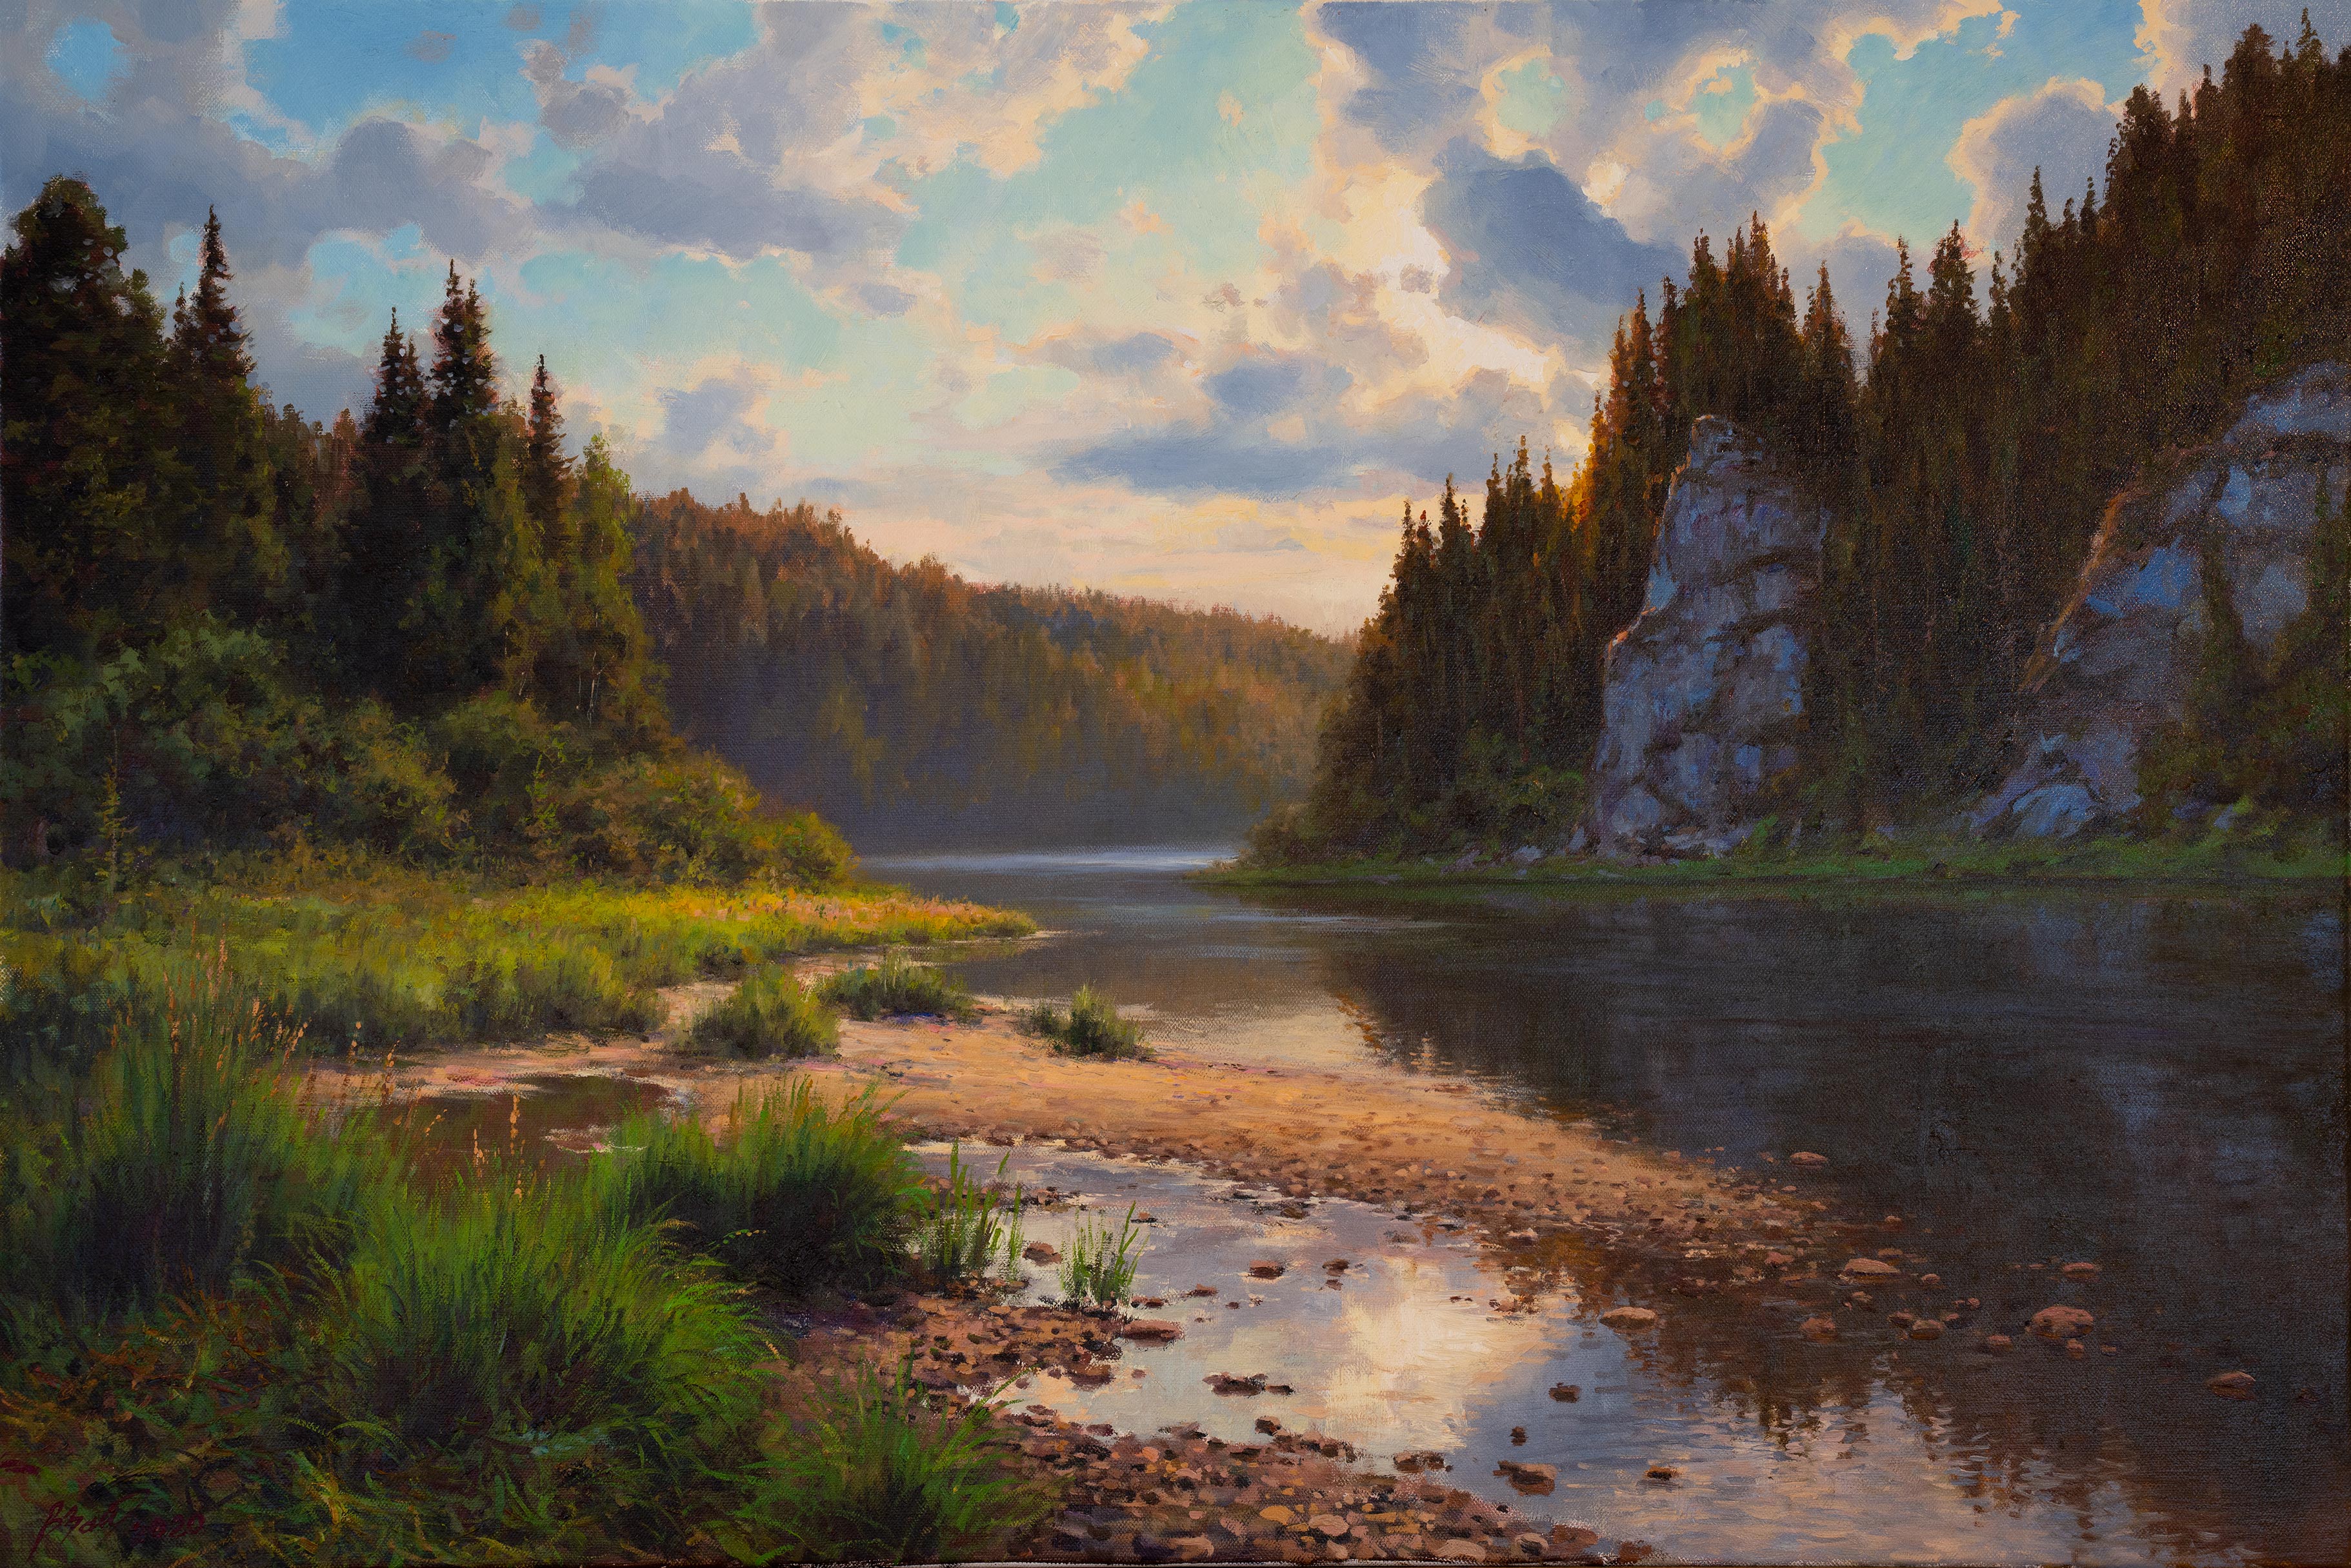 In the evening. The Chusovaya River - 1, Vadim Zainullin, Buy the painting Oil